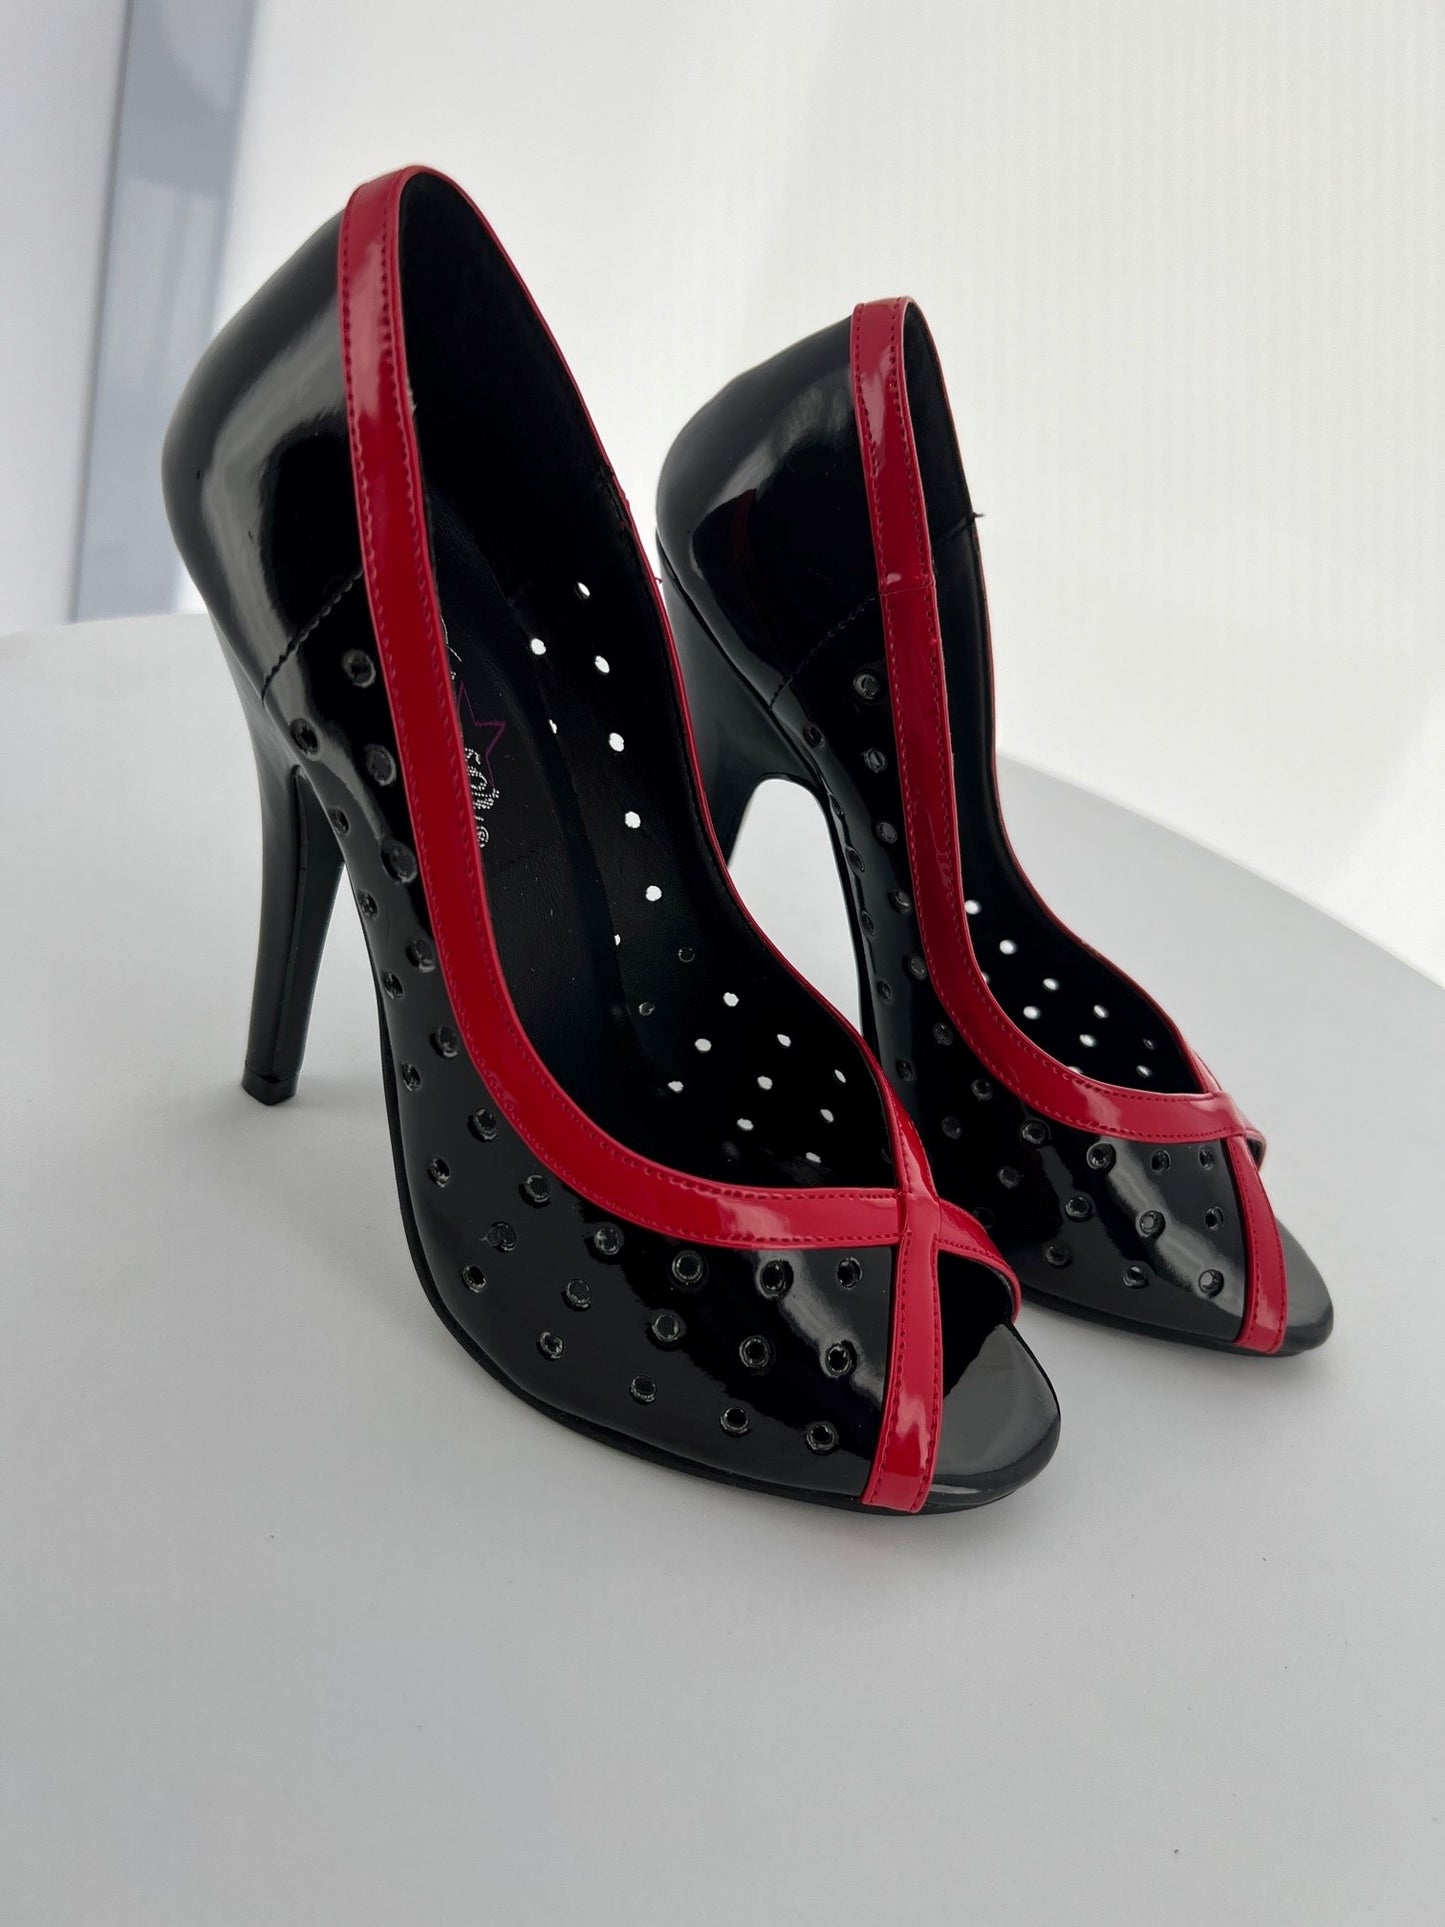 SEDUCE-217 Pleaser Blk/Red Patent High Heel Alternative Footwear Discontinued Sale Stock